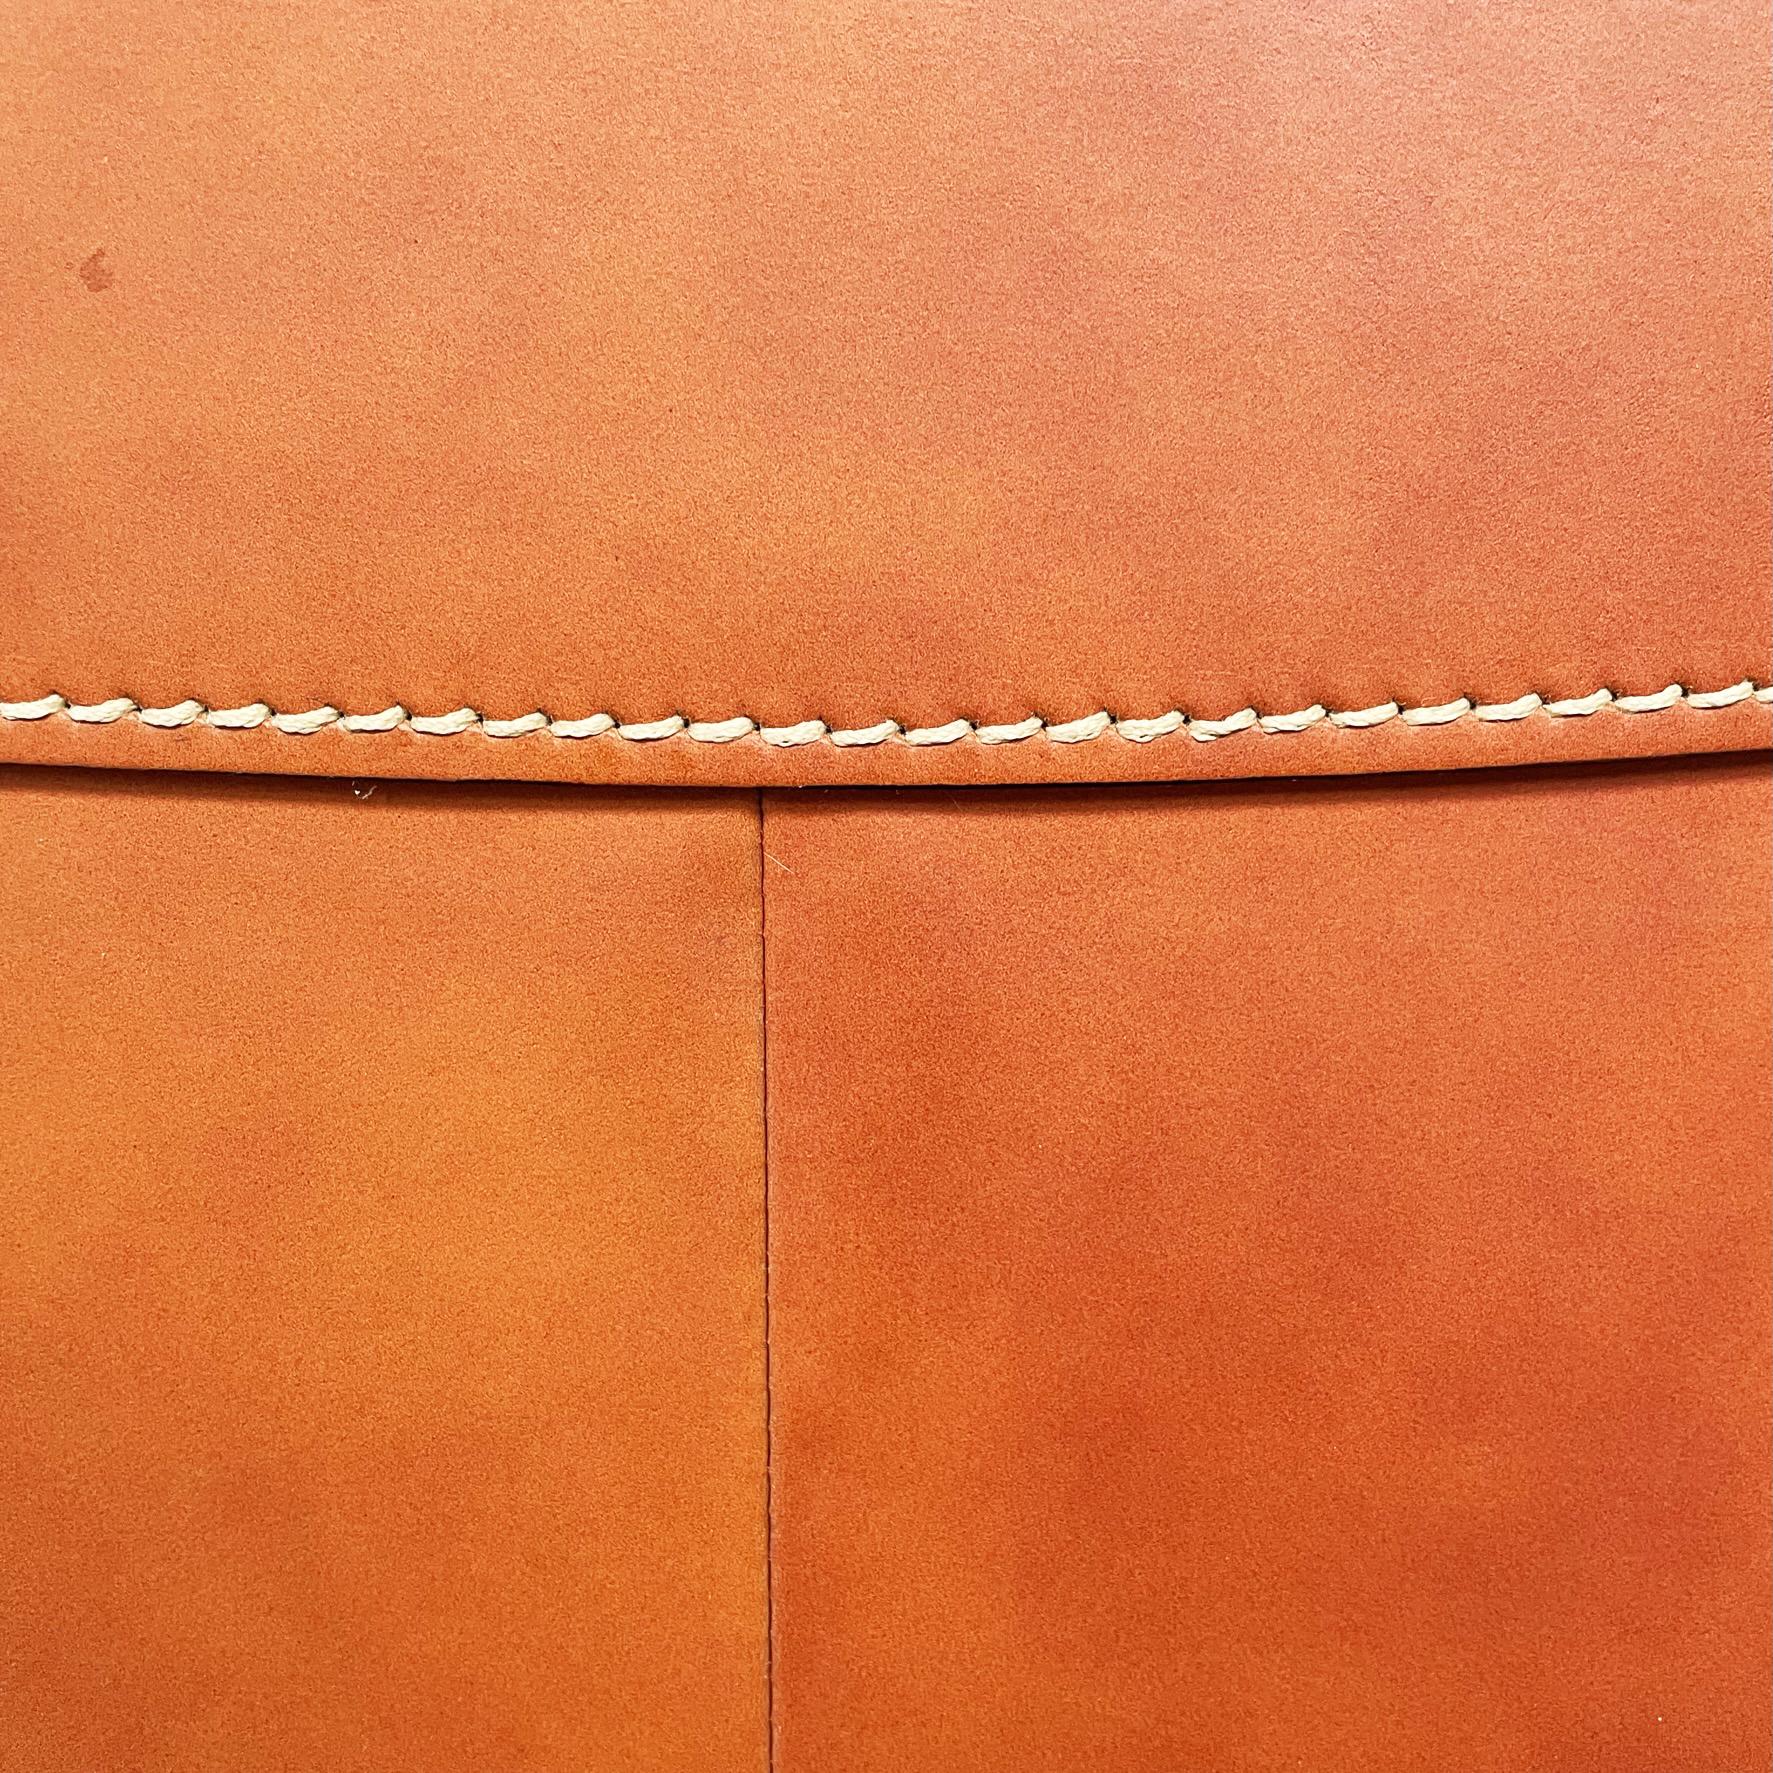 Italian Modern Brown Leather Sofa Twice by Cerri for Poltrona Frau, 1980s For Sale 8